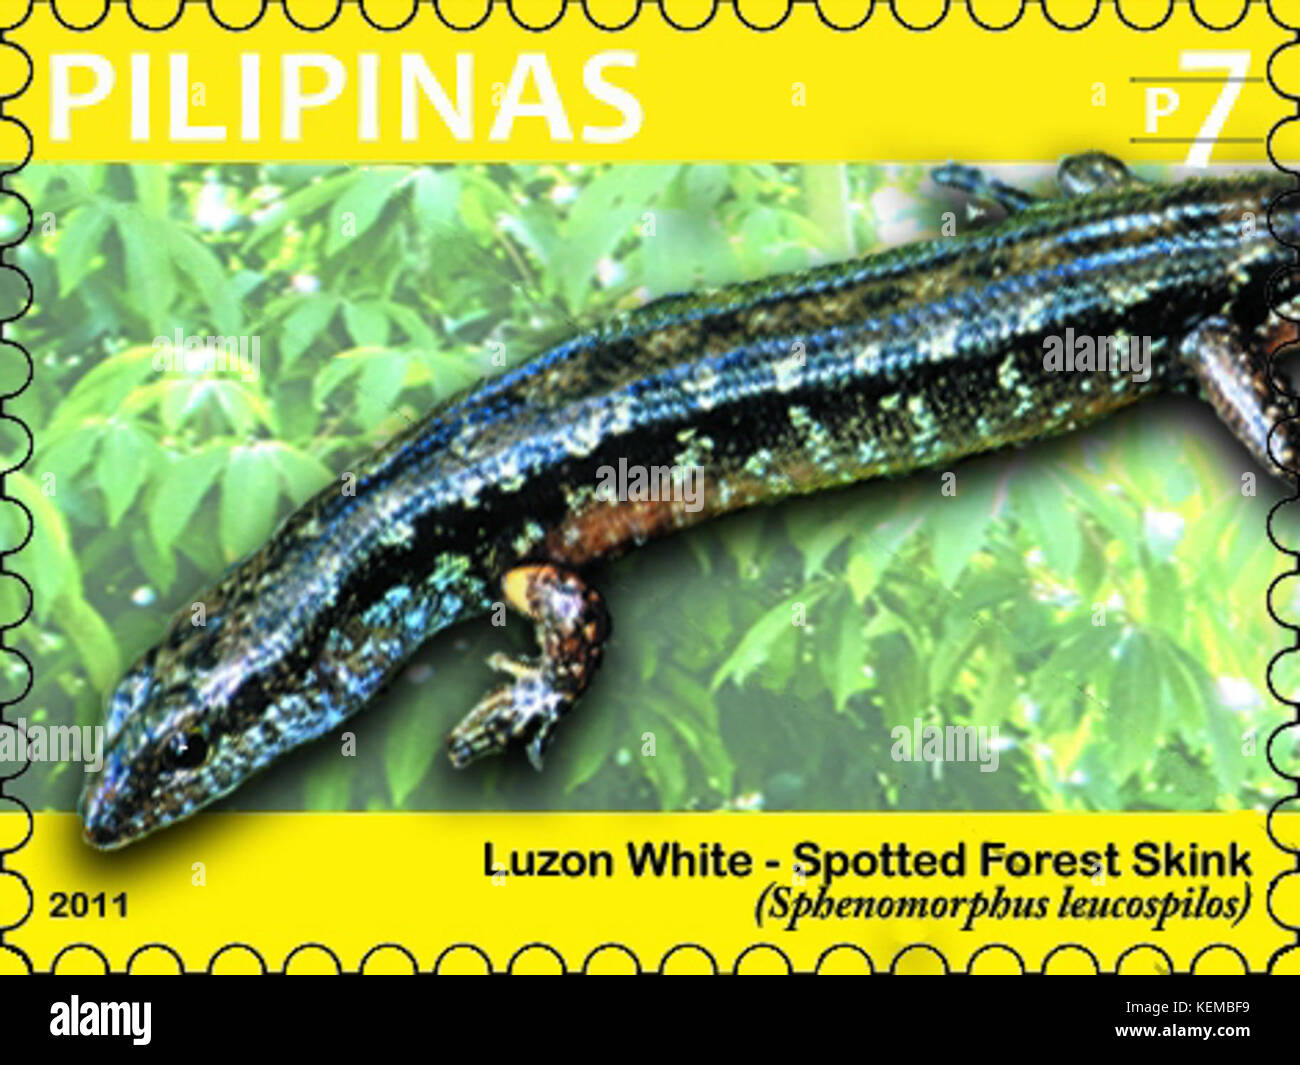 Sphenomorphus leucospilos 2011 stamp of the Philippines Stock Photo